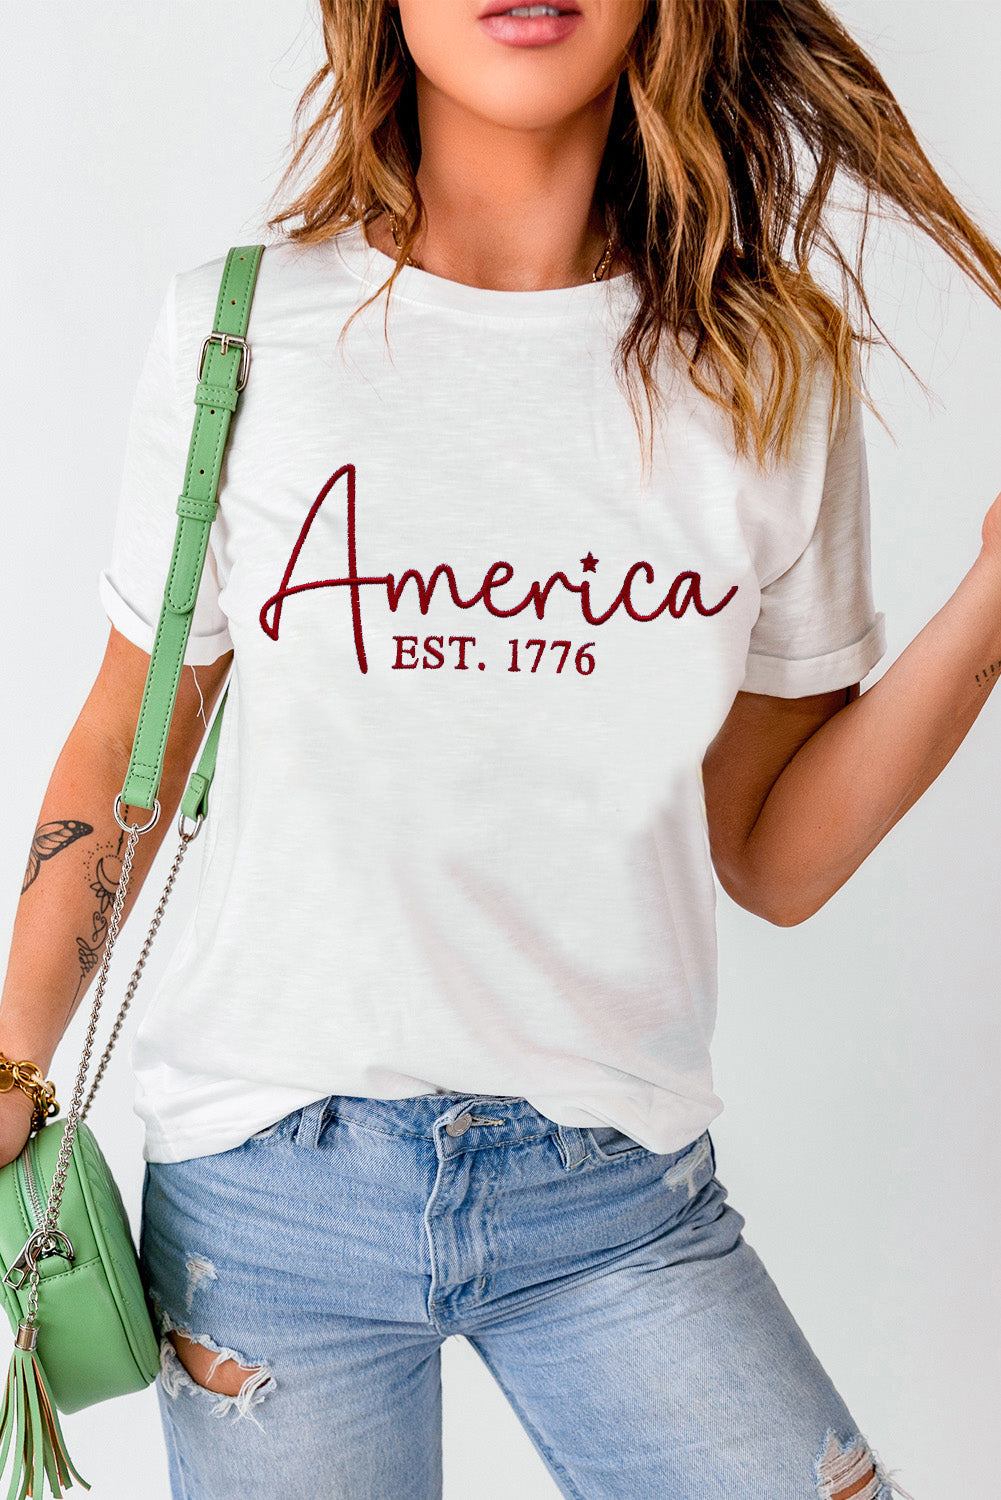 America Est 1776 Short Sleeve Women's Graphic T-Shirt - Sydney So Sweet